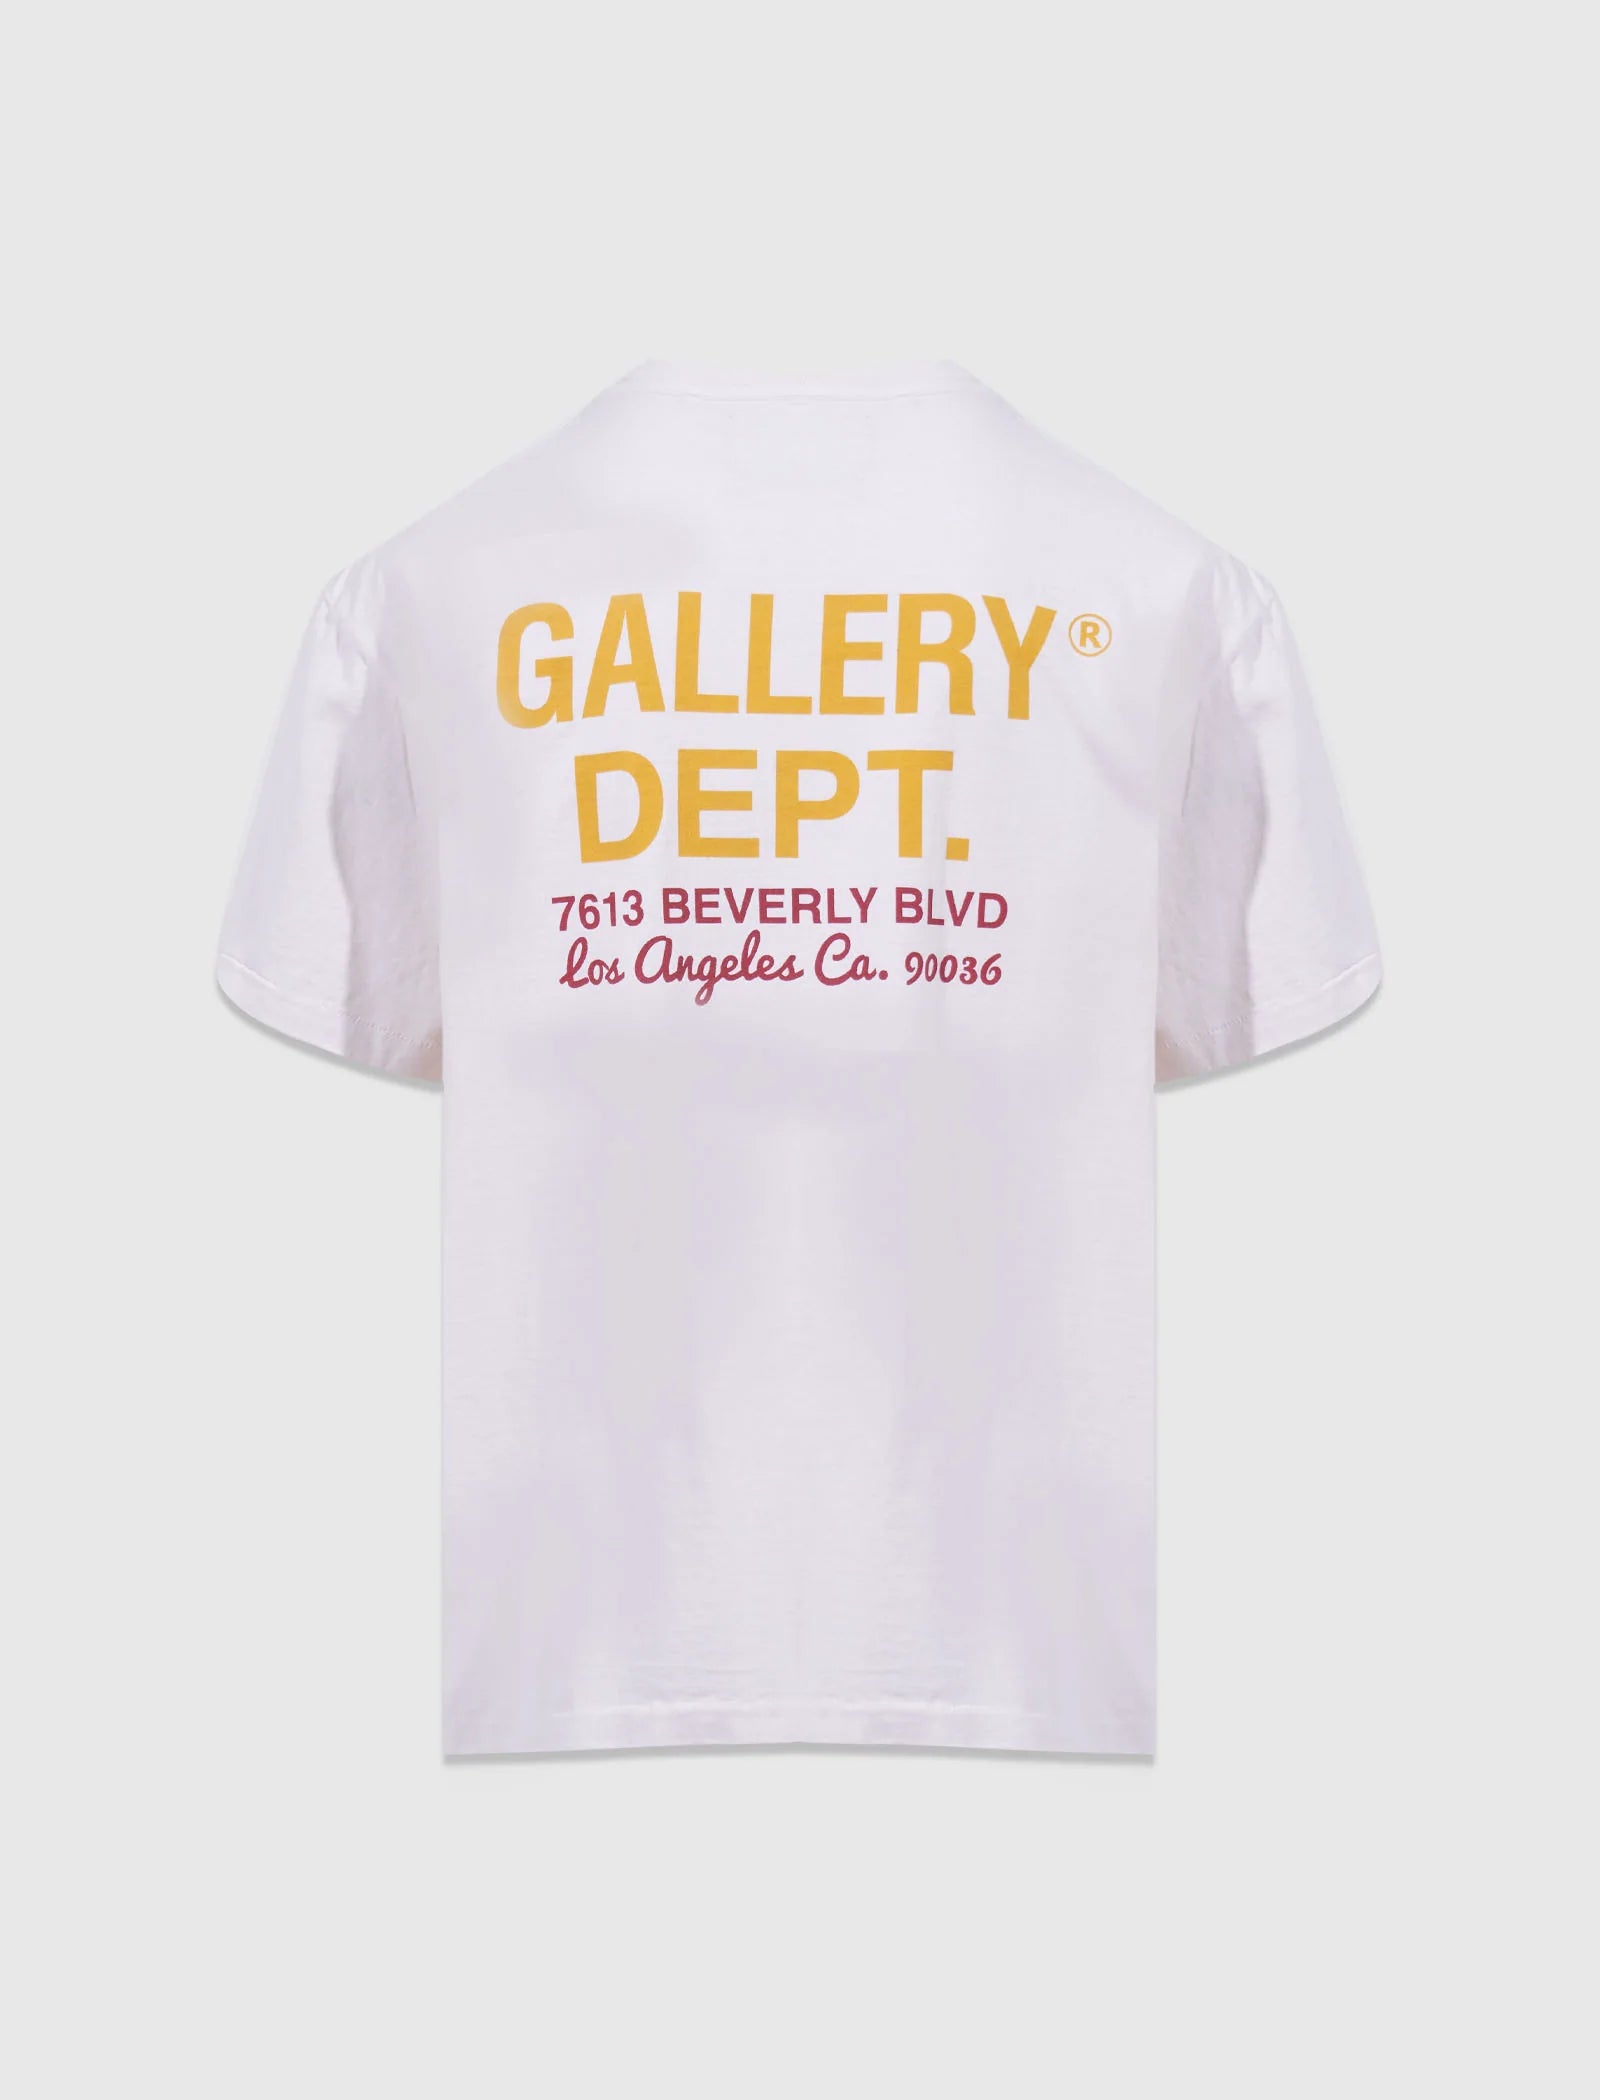 Gallery Dept. Venice Car Show T-Shirt